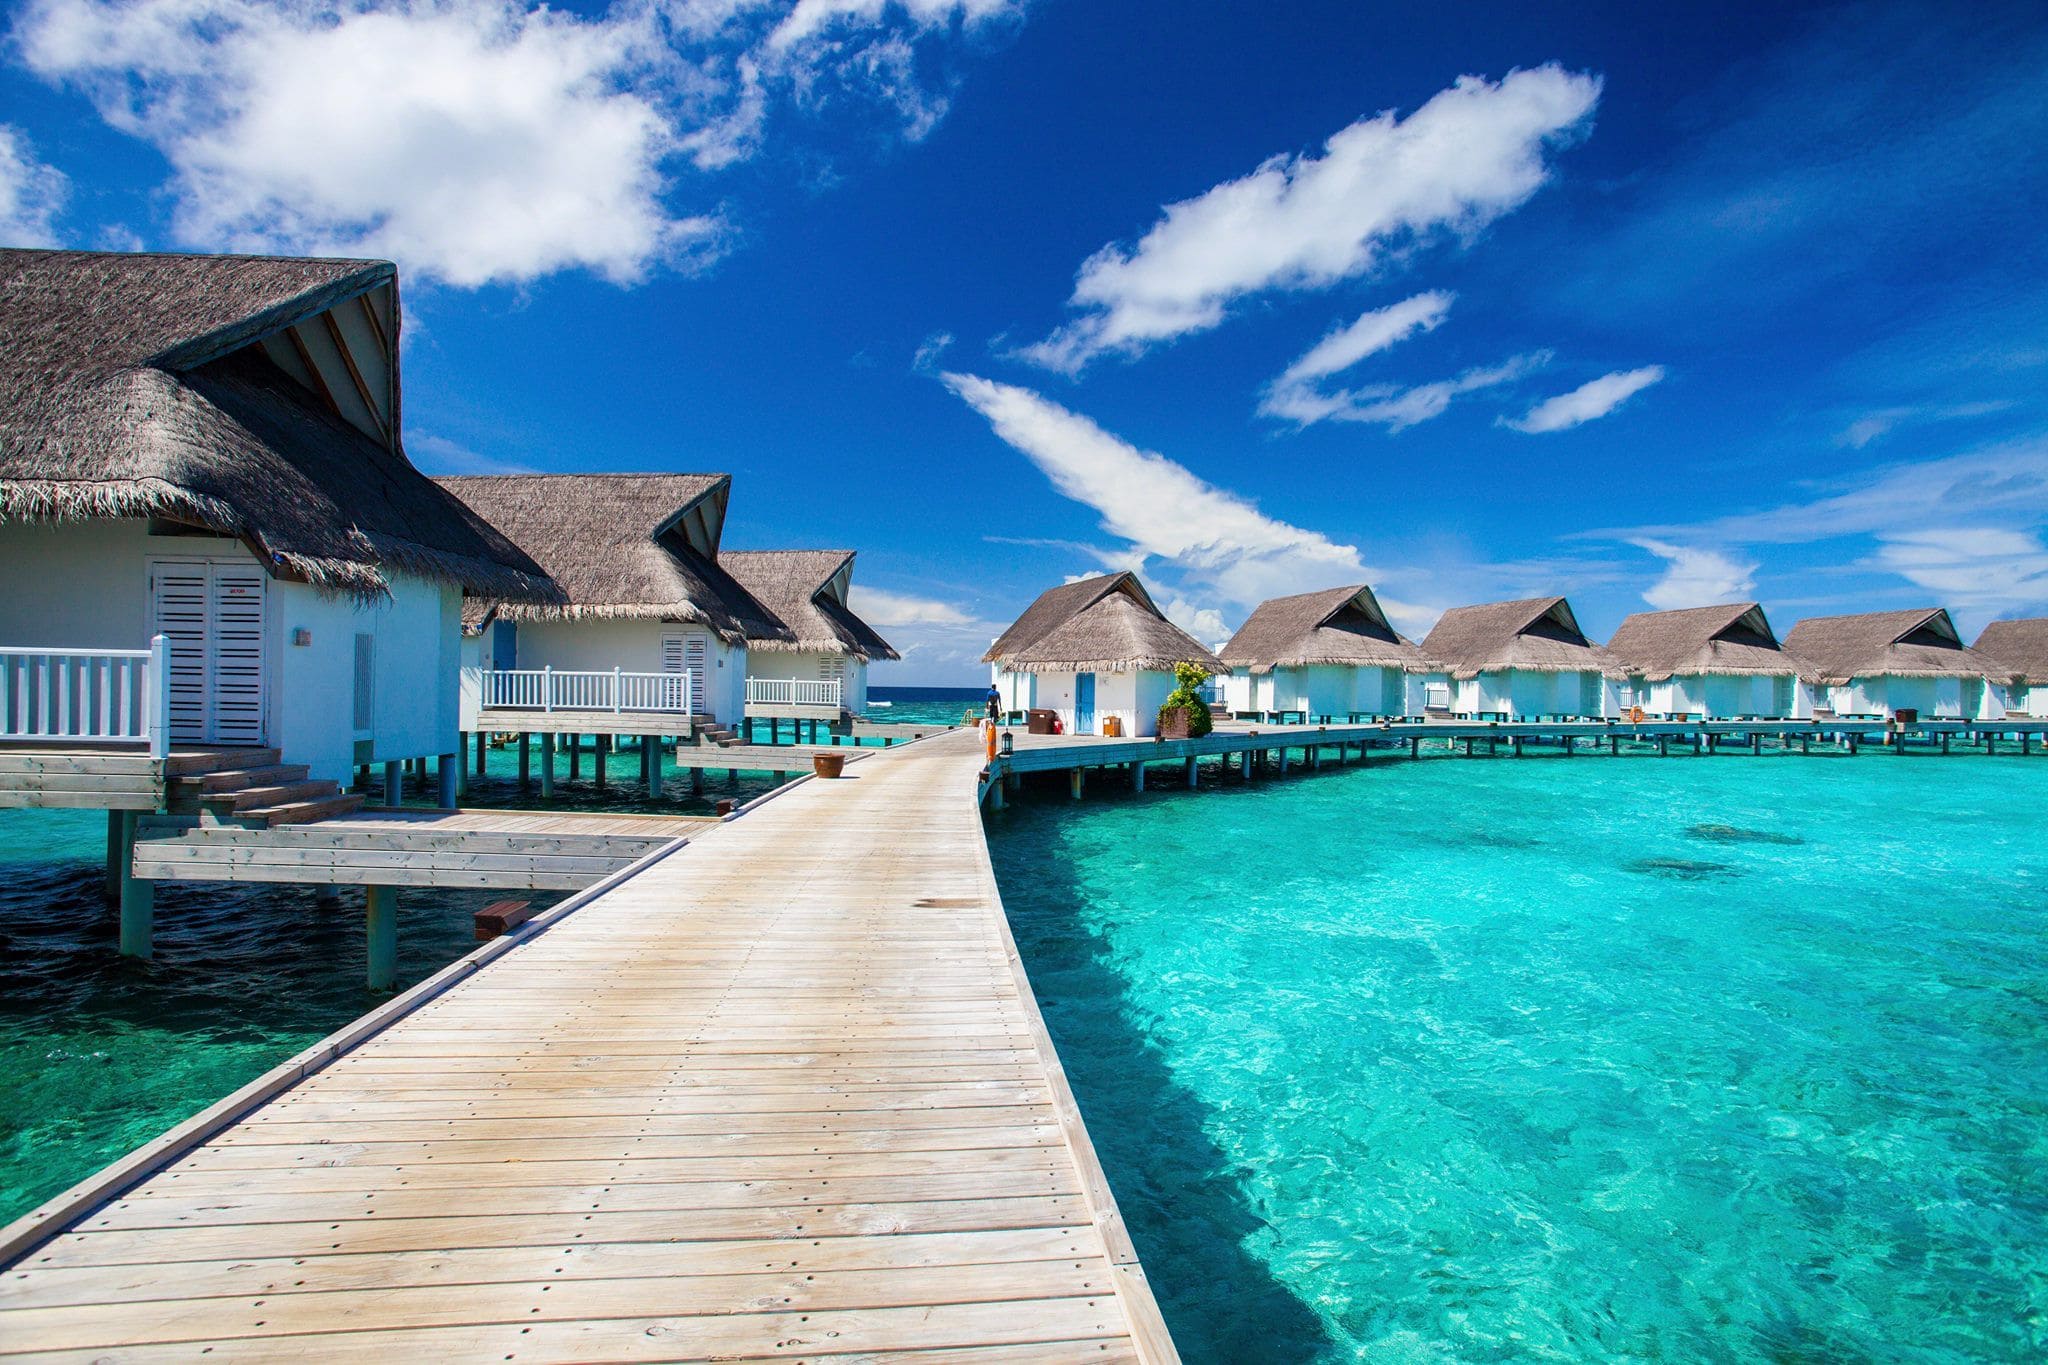 Centara grand island resort. Южная Азия Мальдивы. Centara Grand Island Resort Spa Maldives. Центара рас Фуши Мальдивы. Бунгало Исланд Резорт.